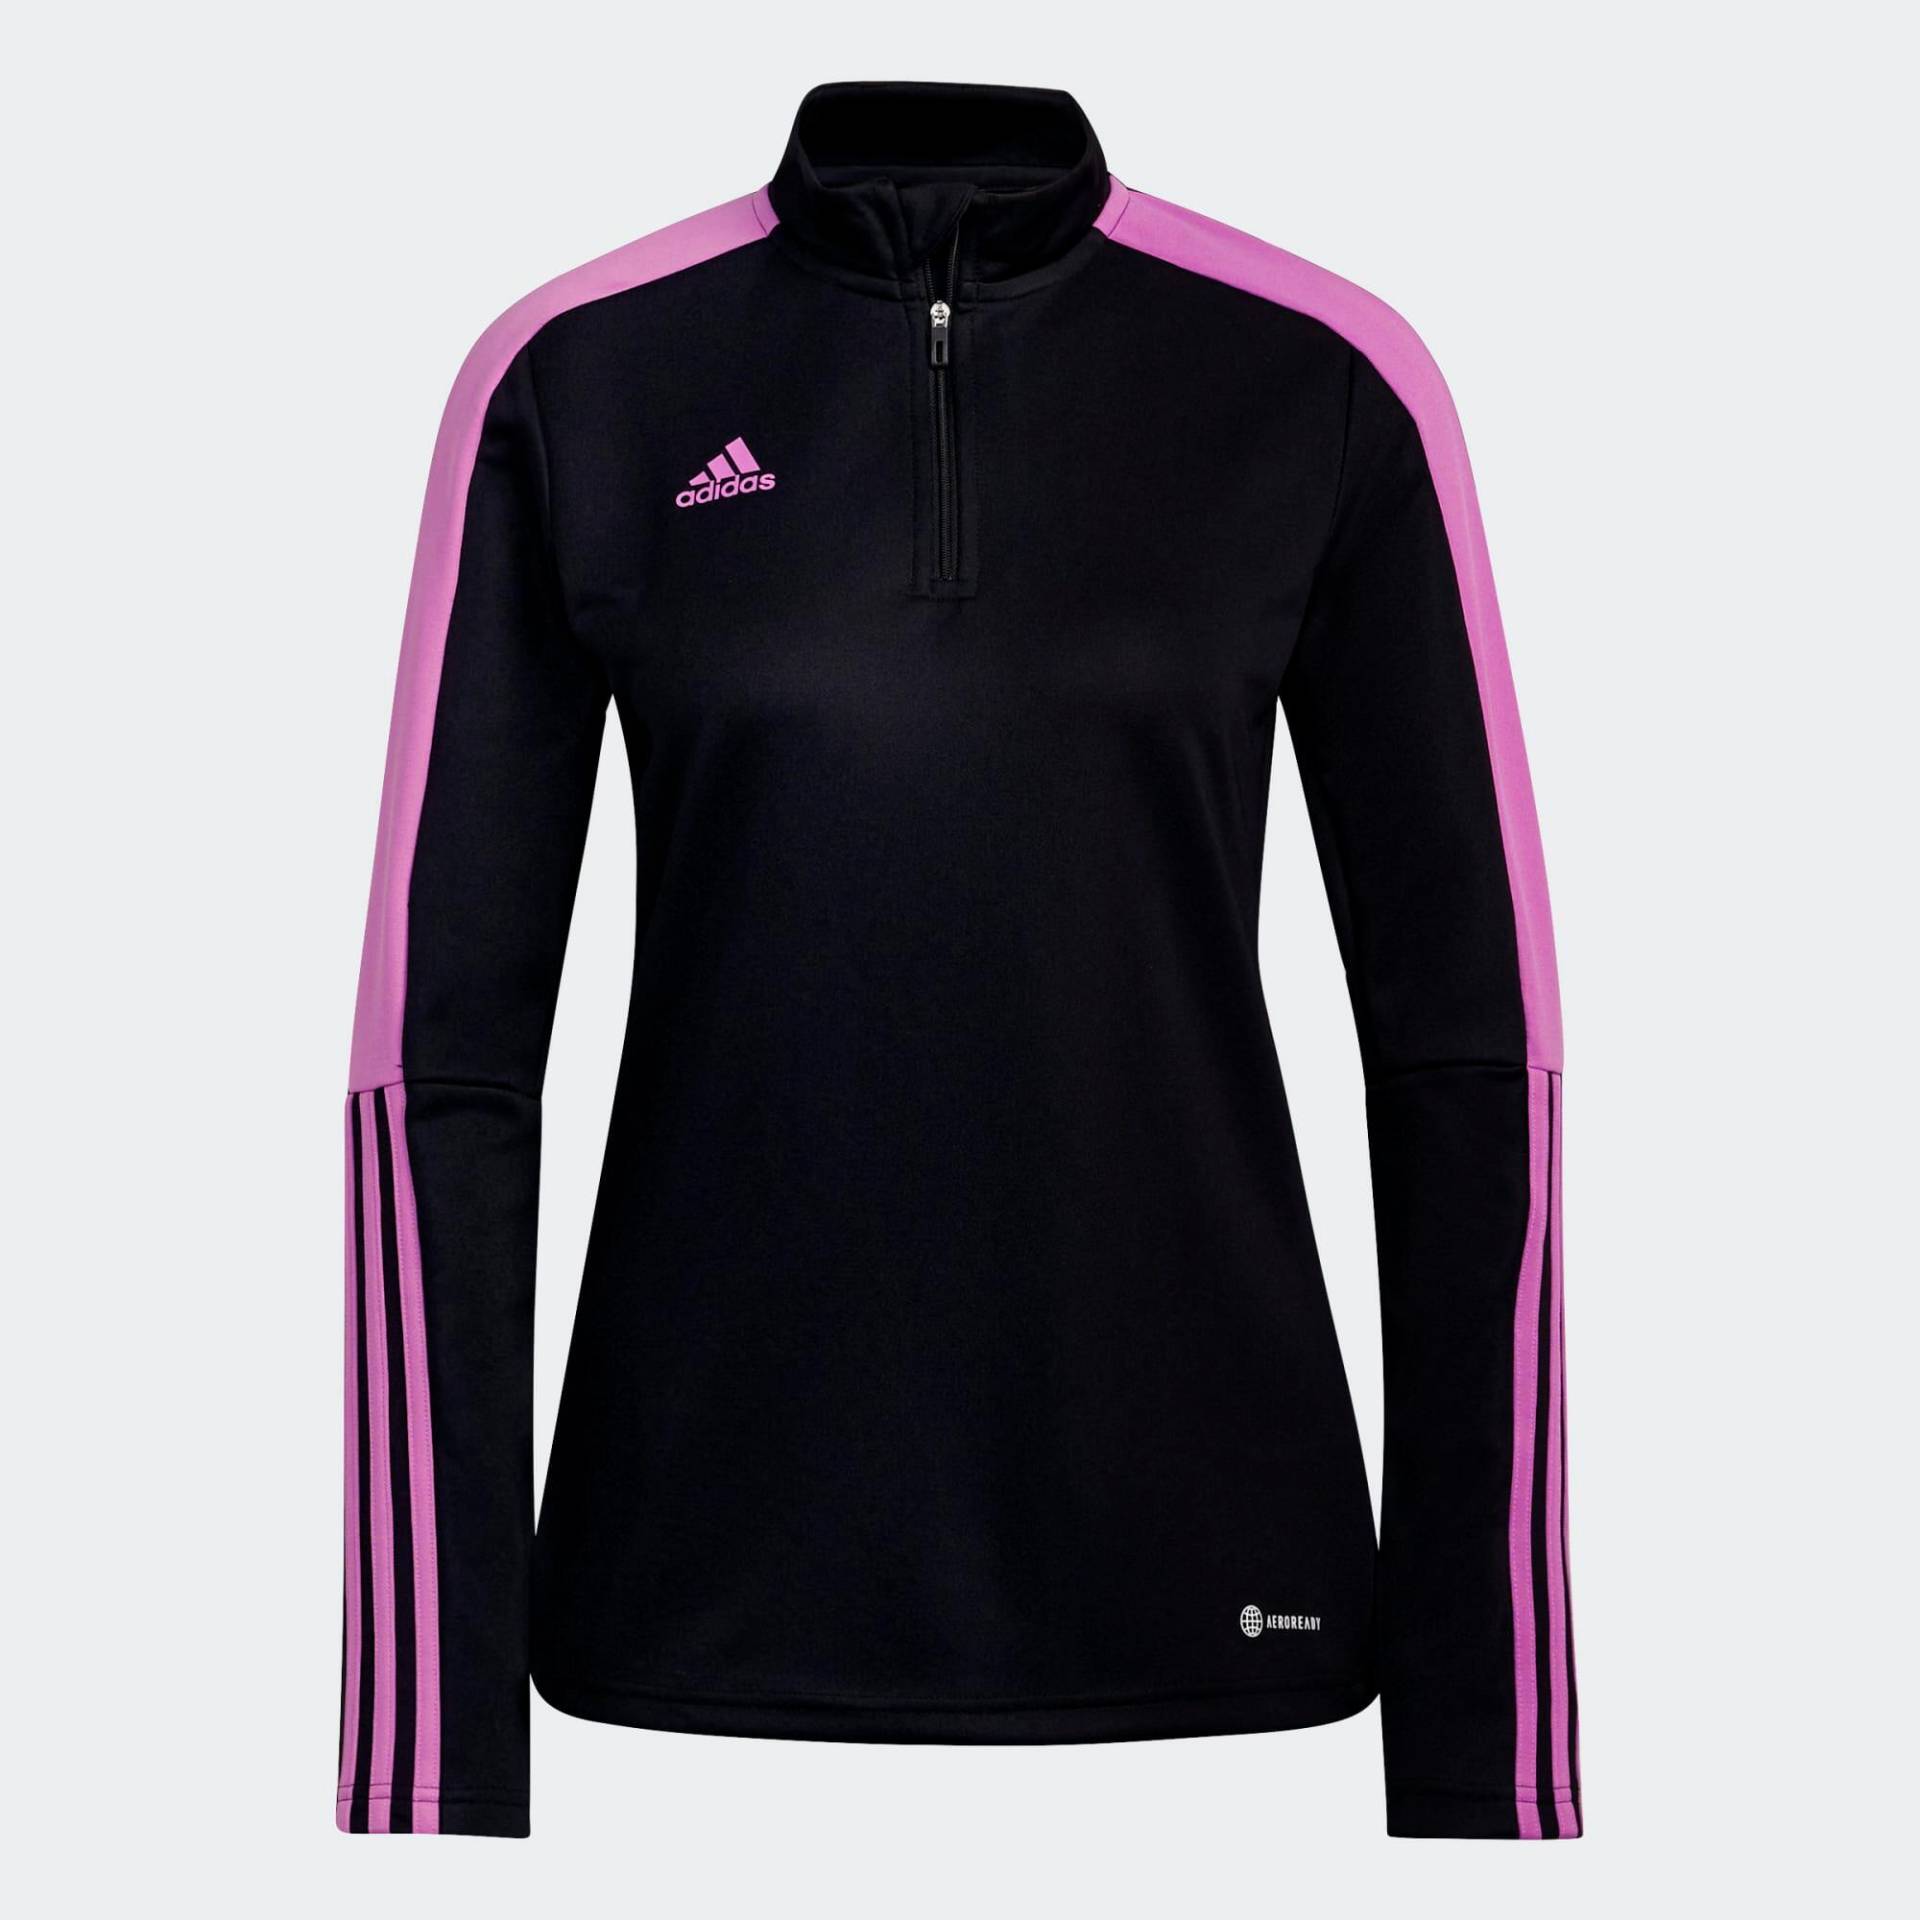 Trainingsjacke Fussball adidas Tiro Damen/Herren schwarz von Adidas